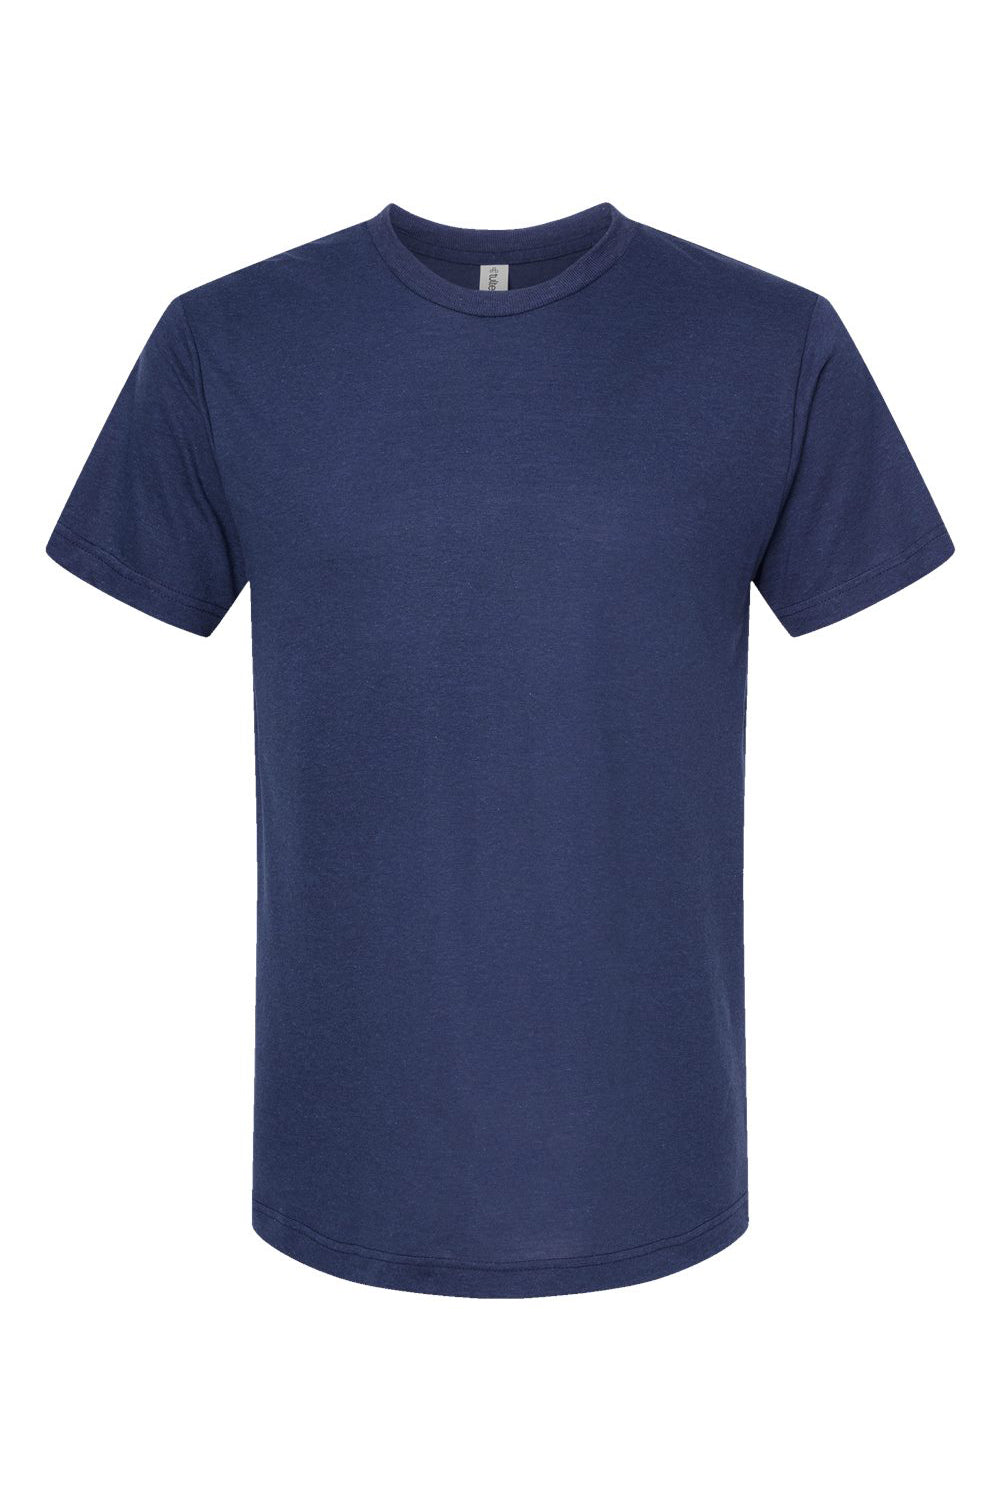 Tultex 254 Mens Short Sleeve Crewneck T-Shirt Midnight Navy Blue Flat Front